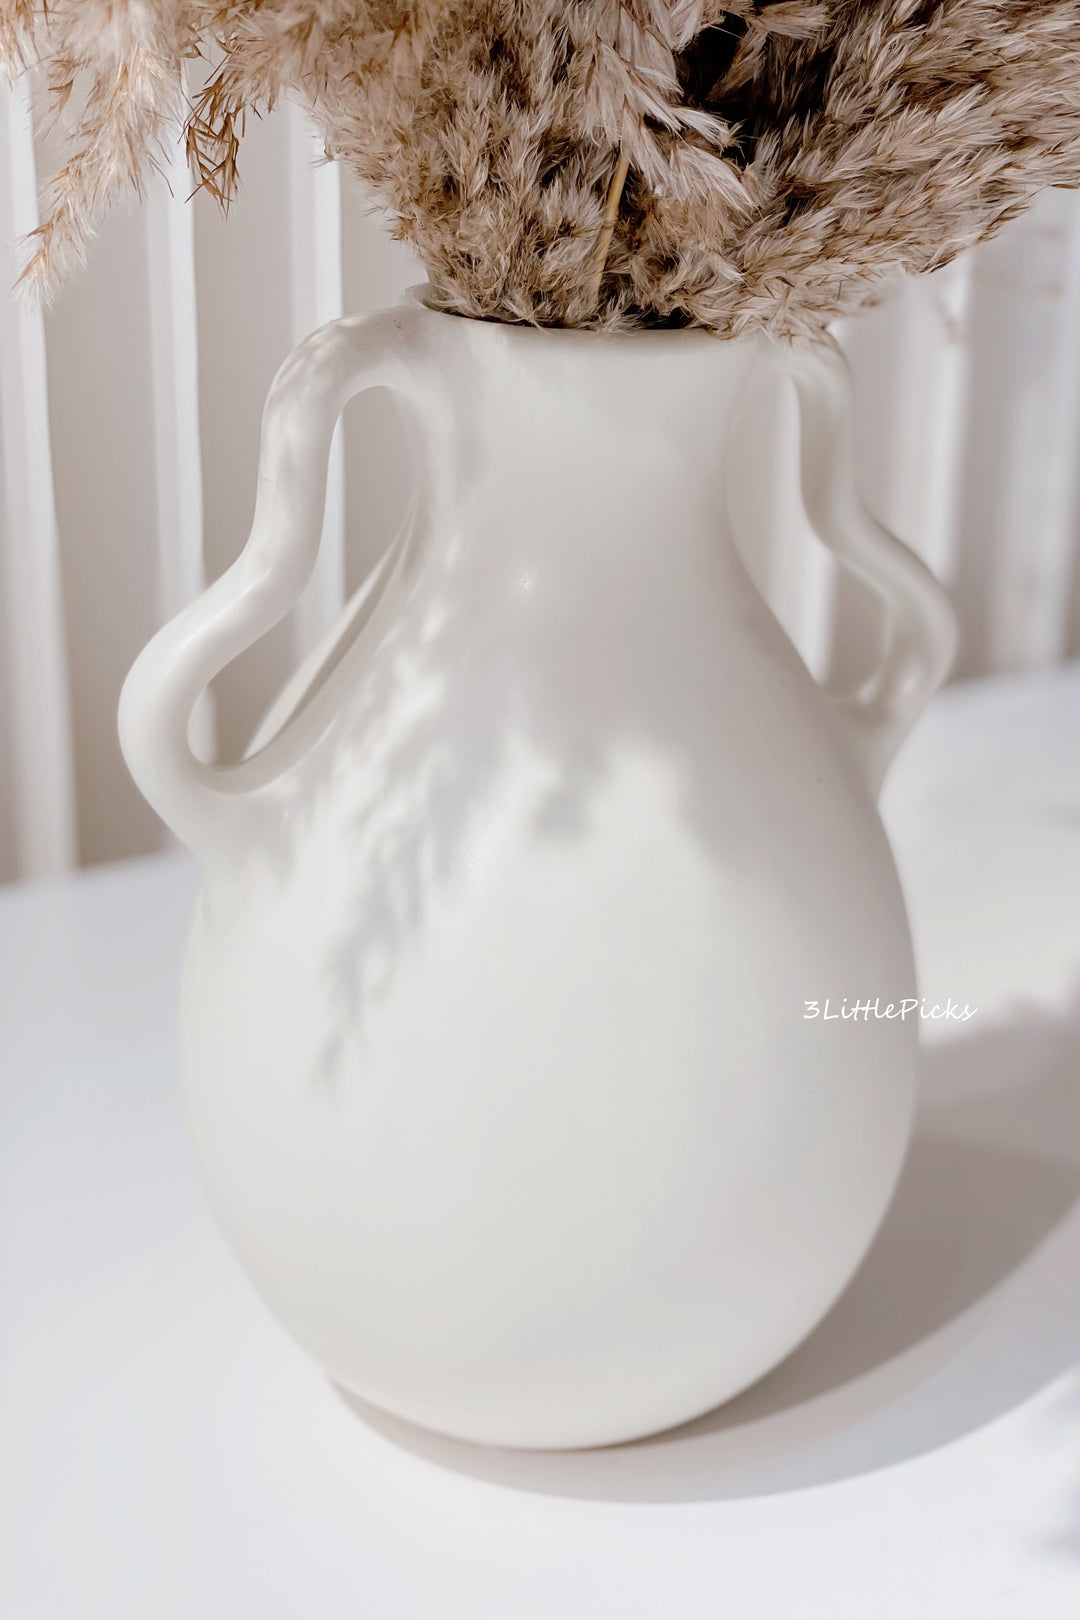 2 Handles Vintage Big Tummy Vase - Cream White